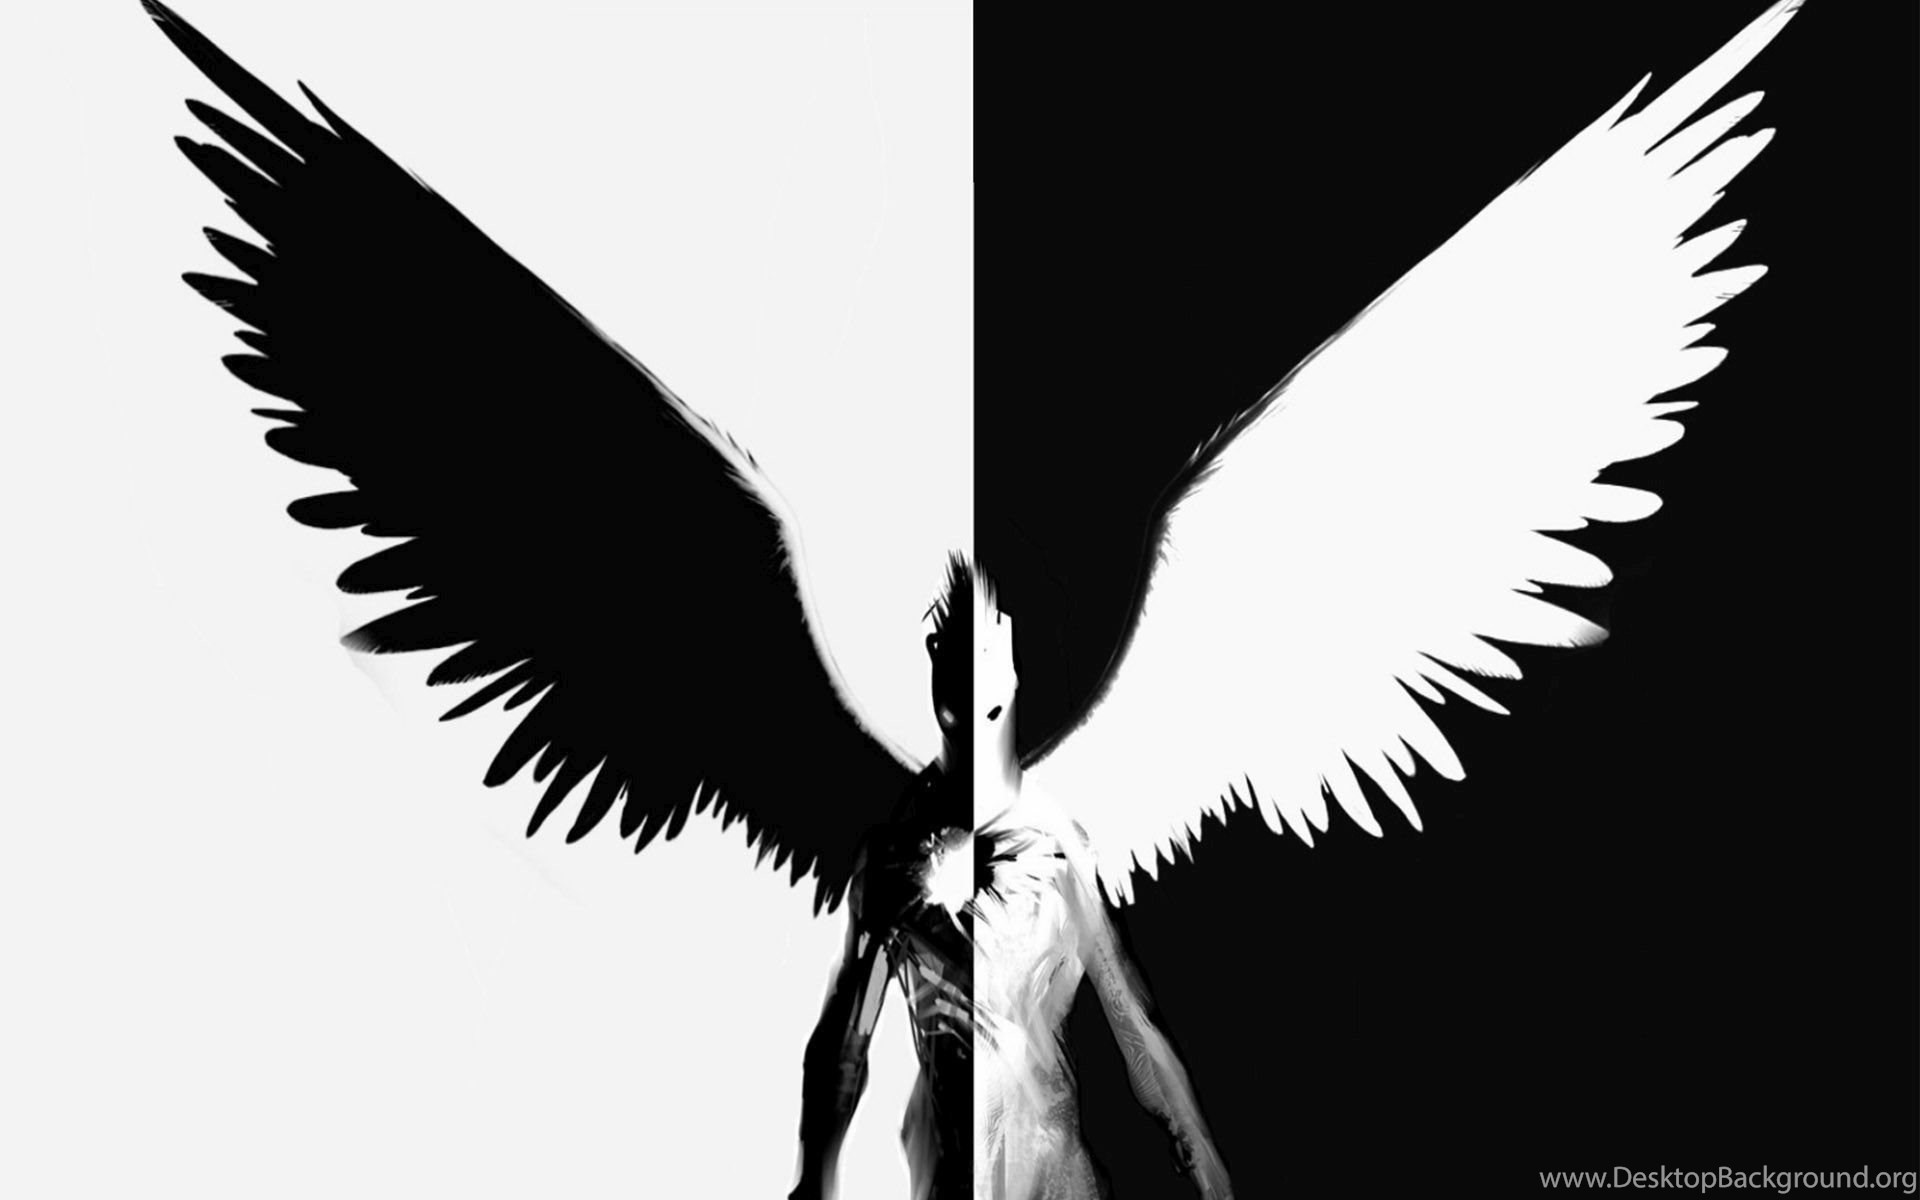 Half Angel Half Demon